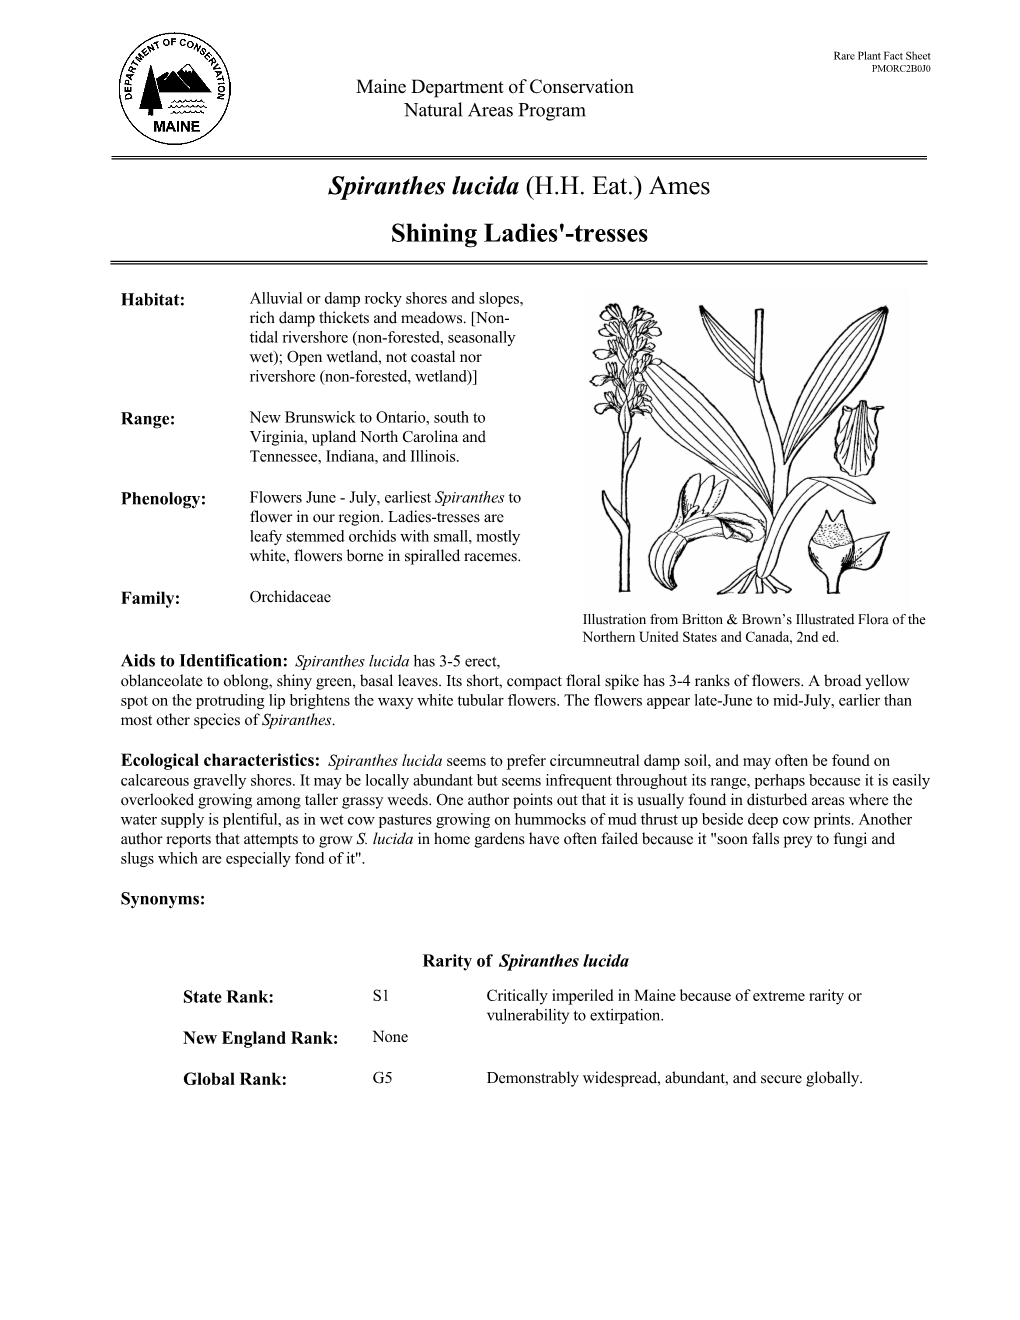 Spiranthes Lucida Rare Plant Fact Sheet